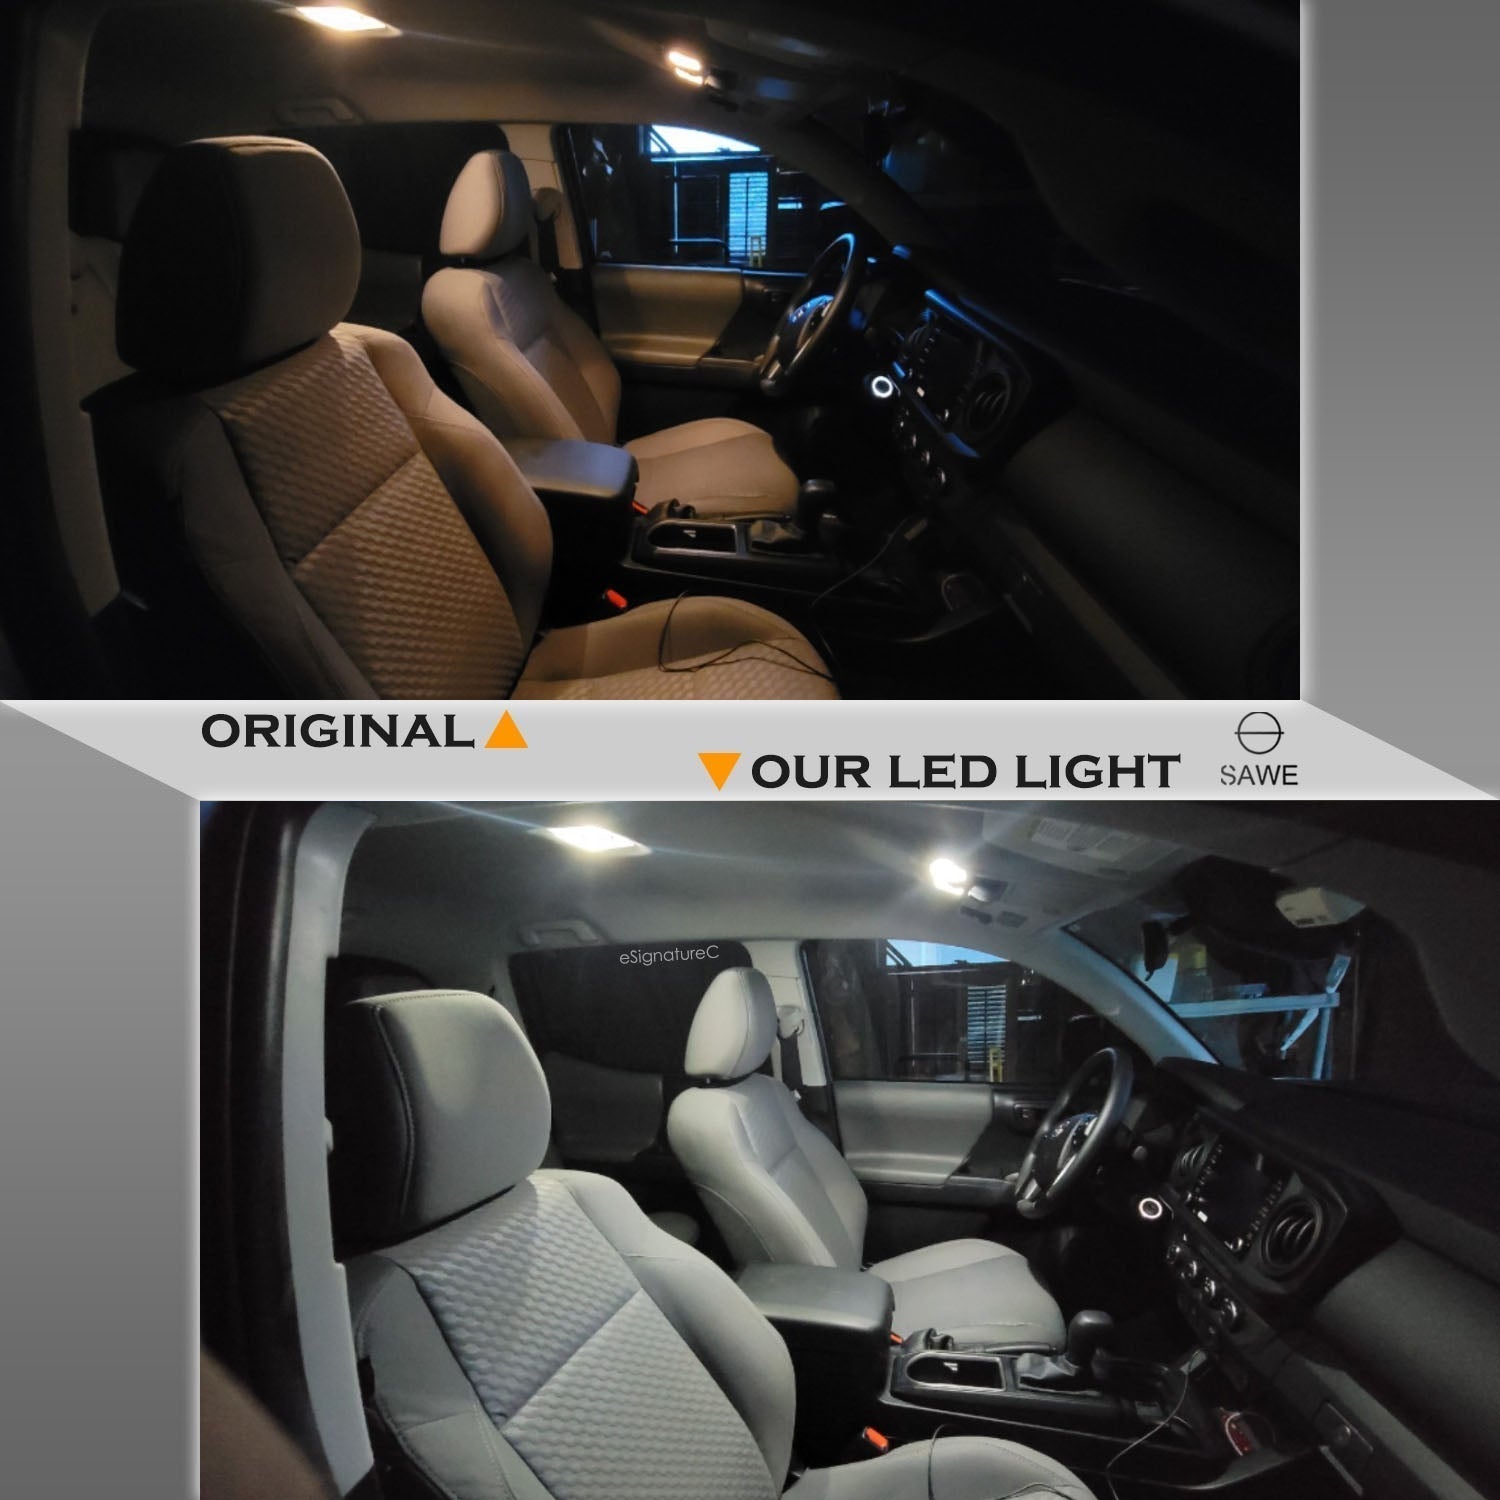 For Nissan Murano Interior LED Lights - Dome & Map Light Bulbs Package Kit for 2003 - 2007 - White